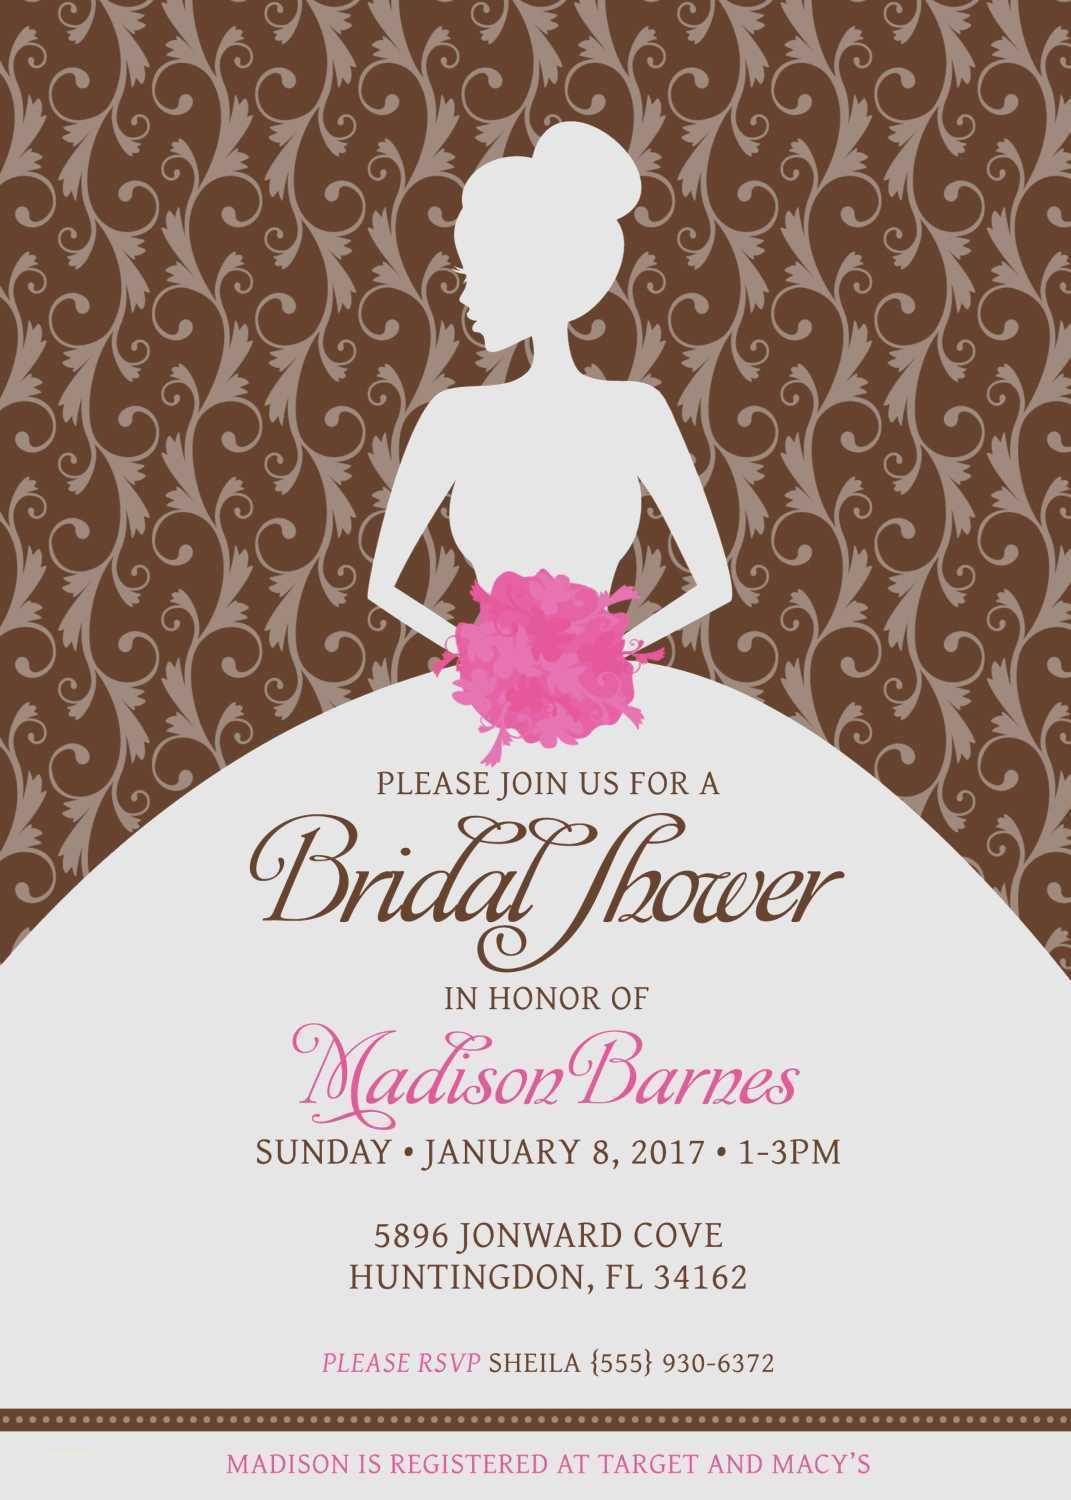 Bridal Shower Invitations. Blank Bridal Shower Invitations Intended For Blank Bridal Shower Invitations Templates